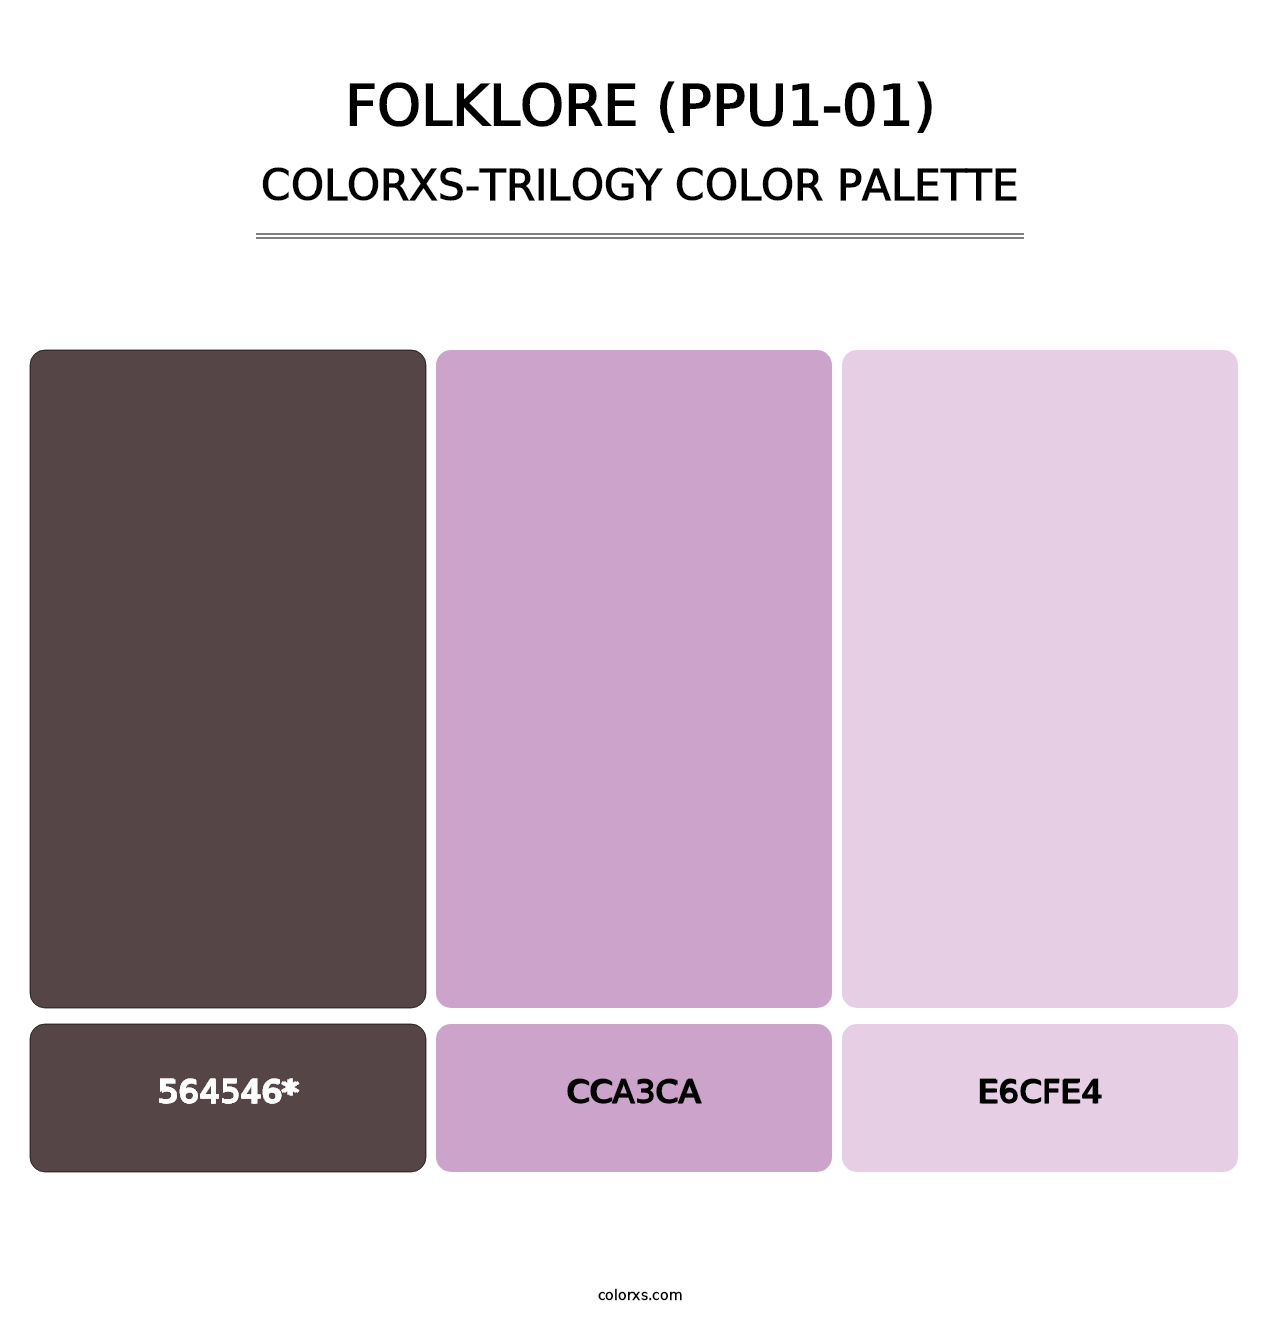 Folklore (PPU1-01) - Colorxs Trilogy Palette